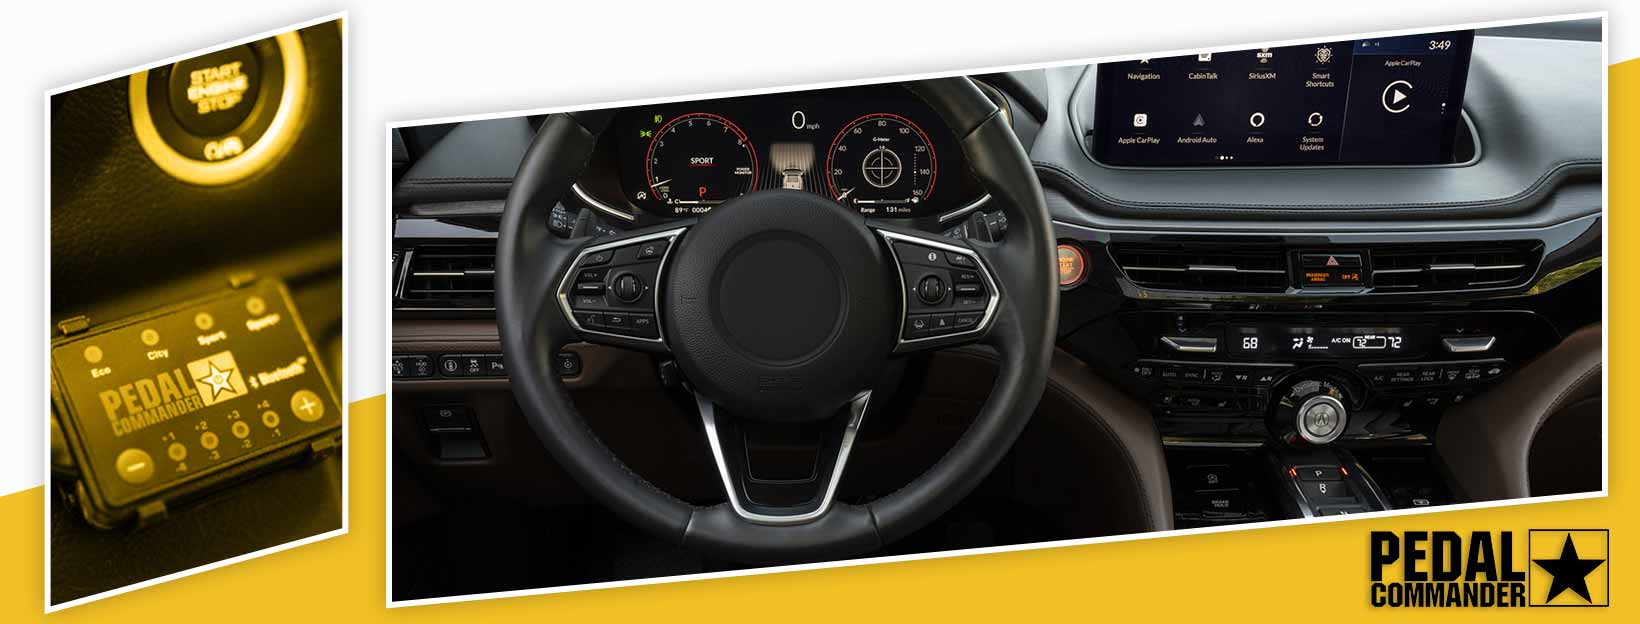 Pedal Commander for Acura RLX - interior